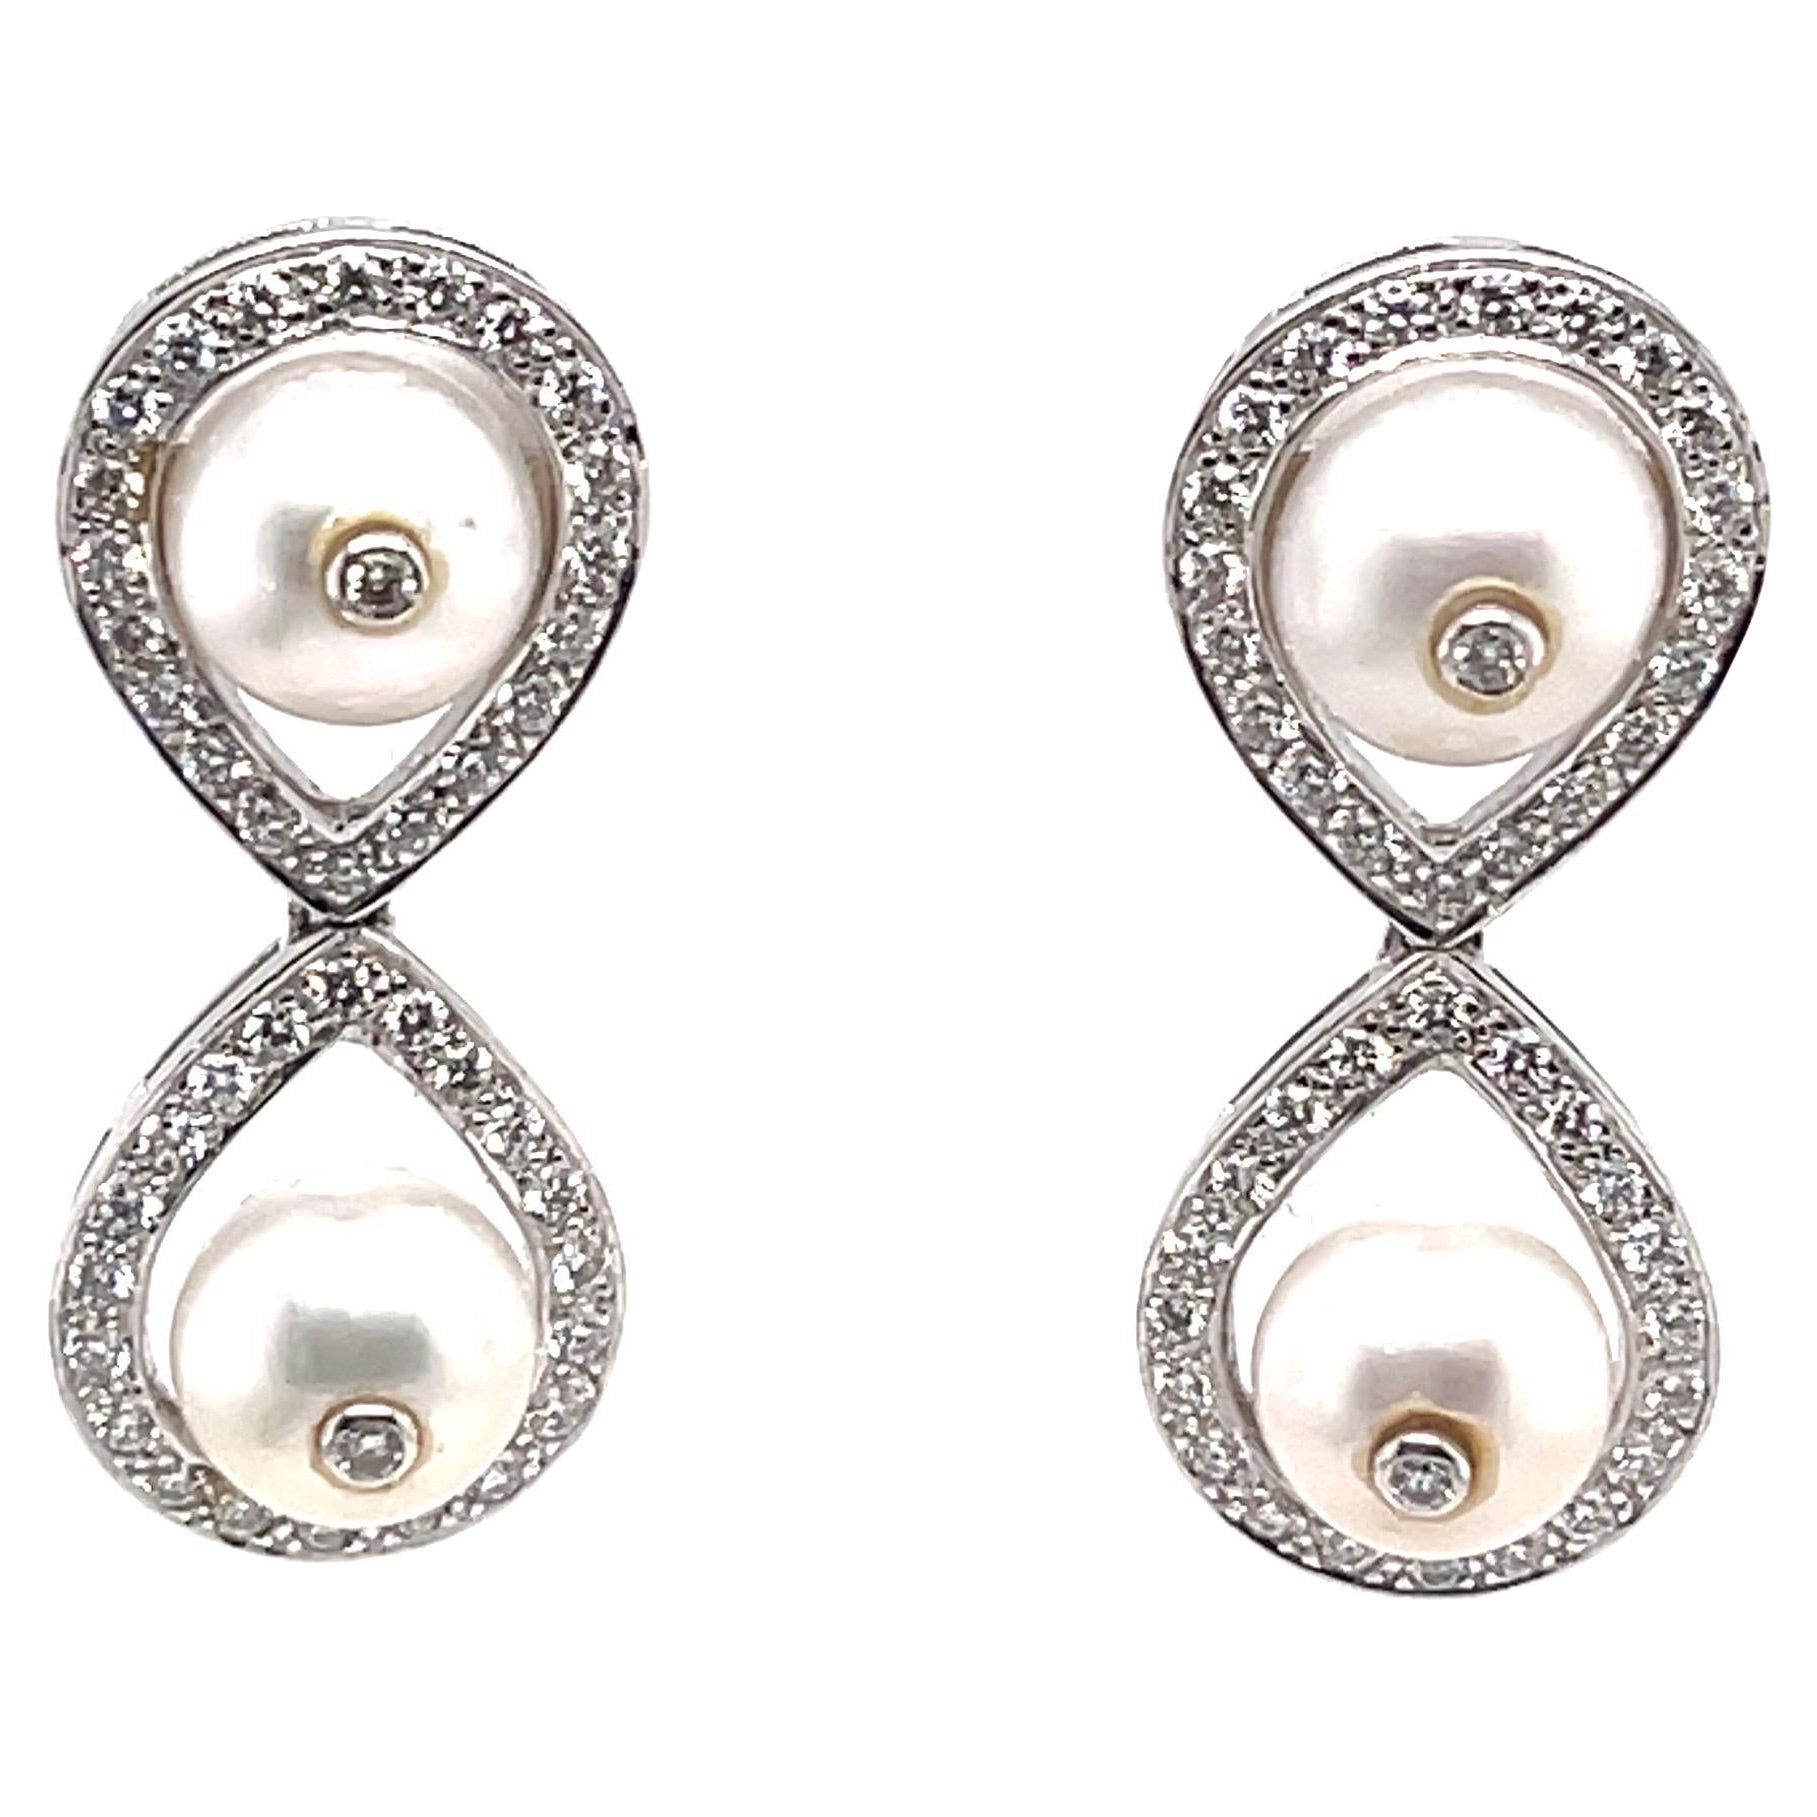 Infiniti South Sea Pearl Diamond Earrings